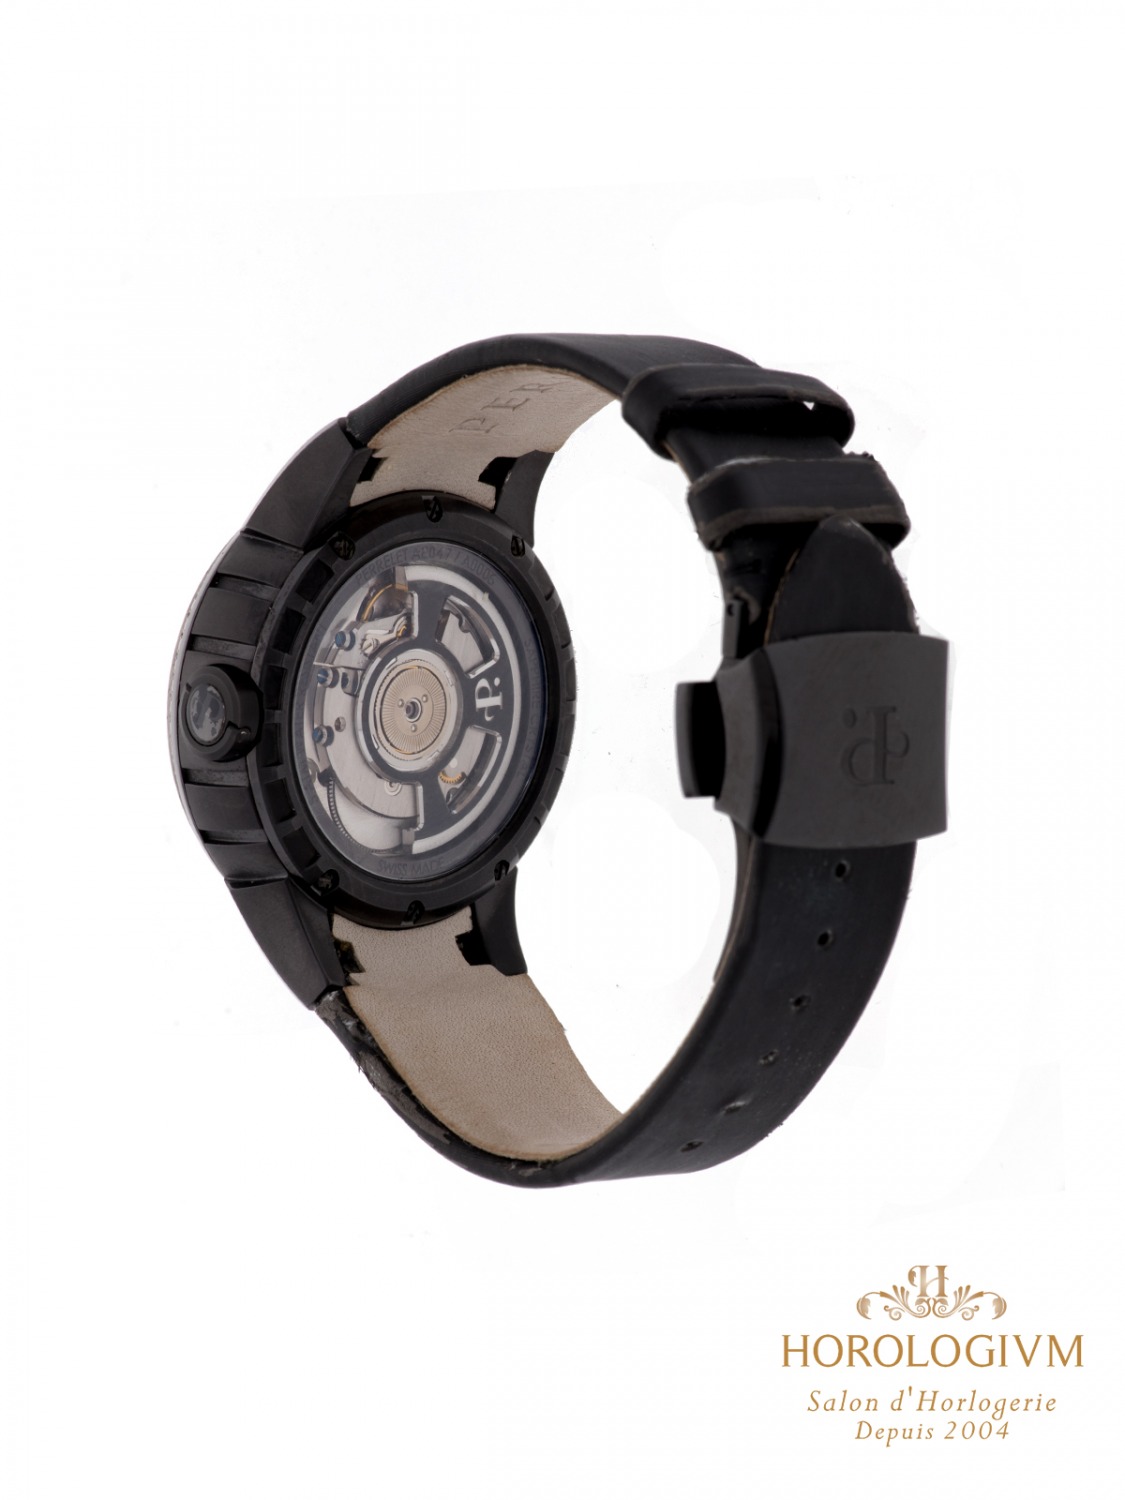 Perrelet Turbine XS REF. A2047 watch, black PVD (Physical Vapor Deposition)